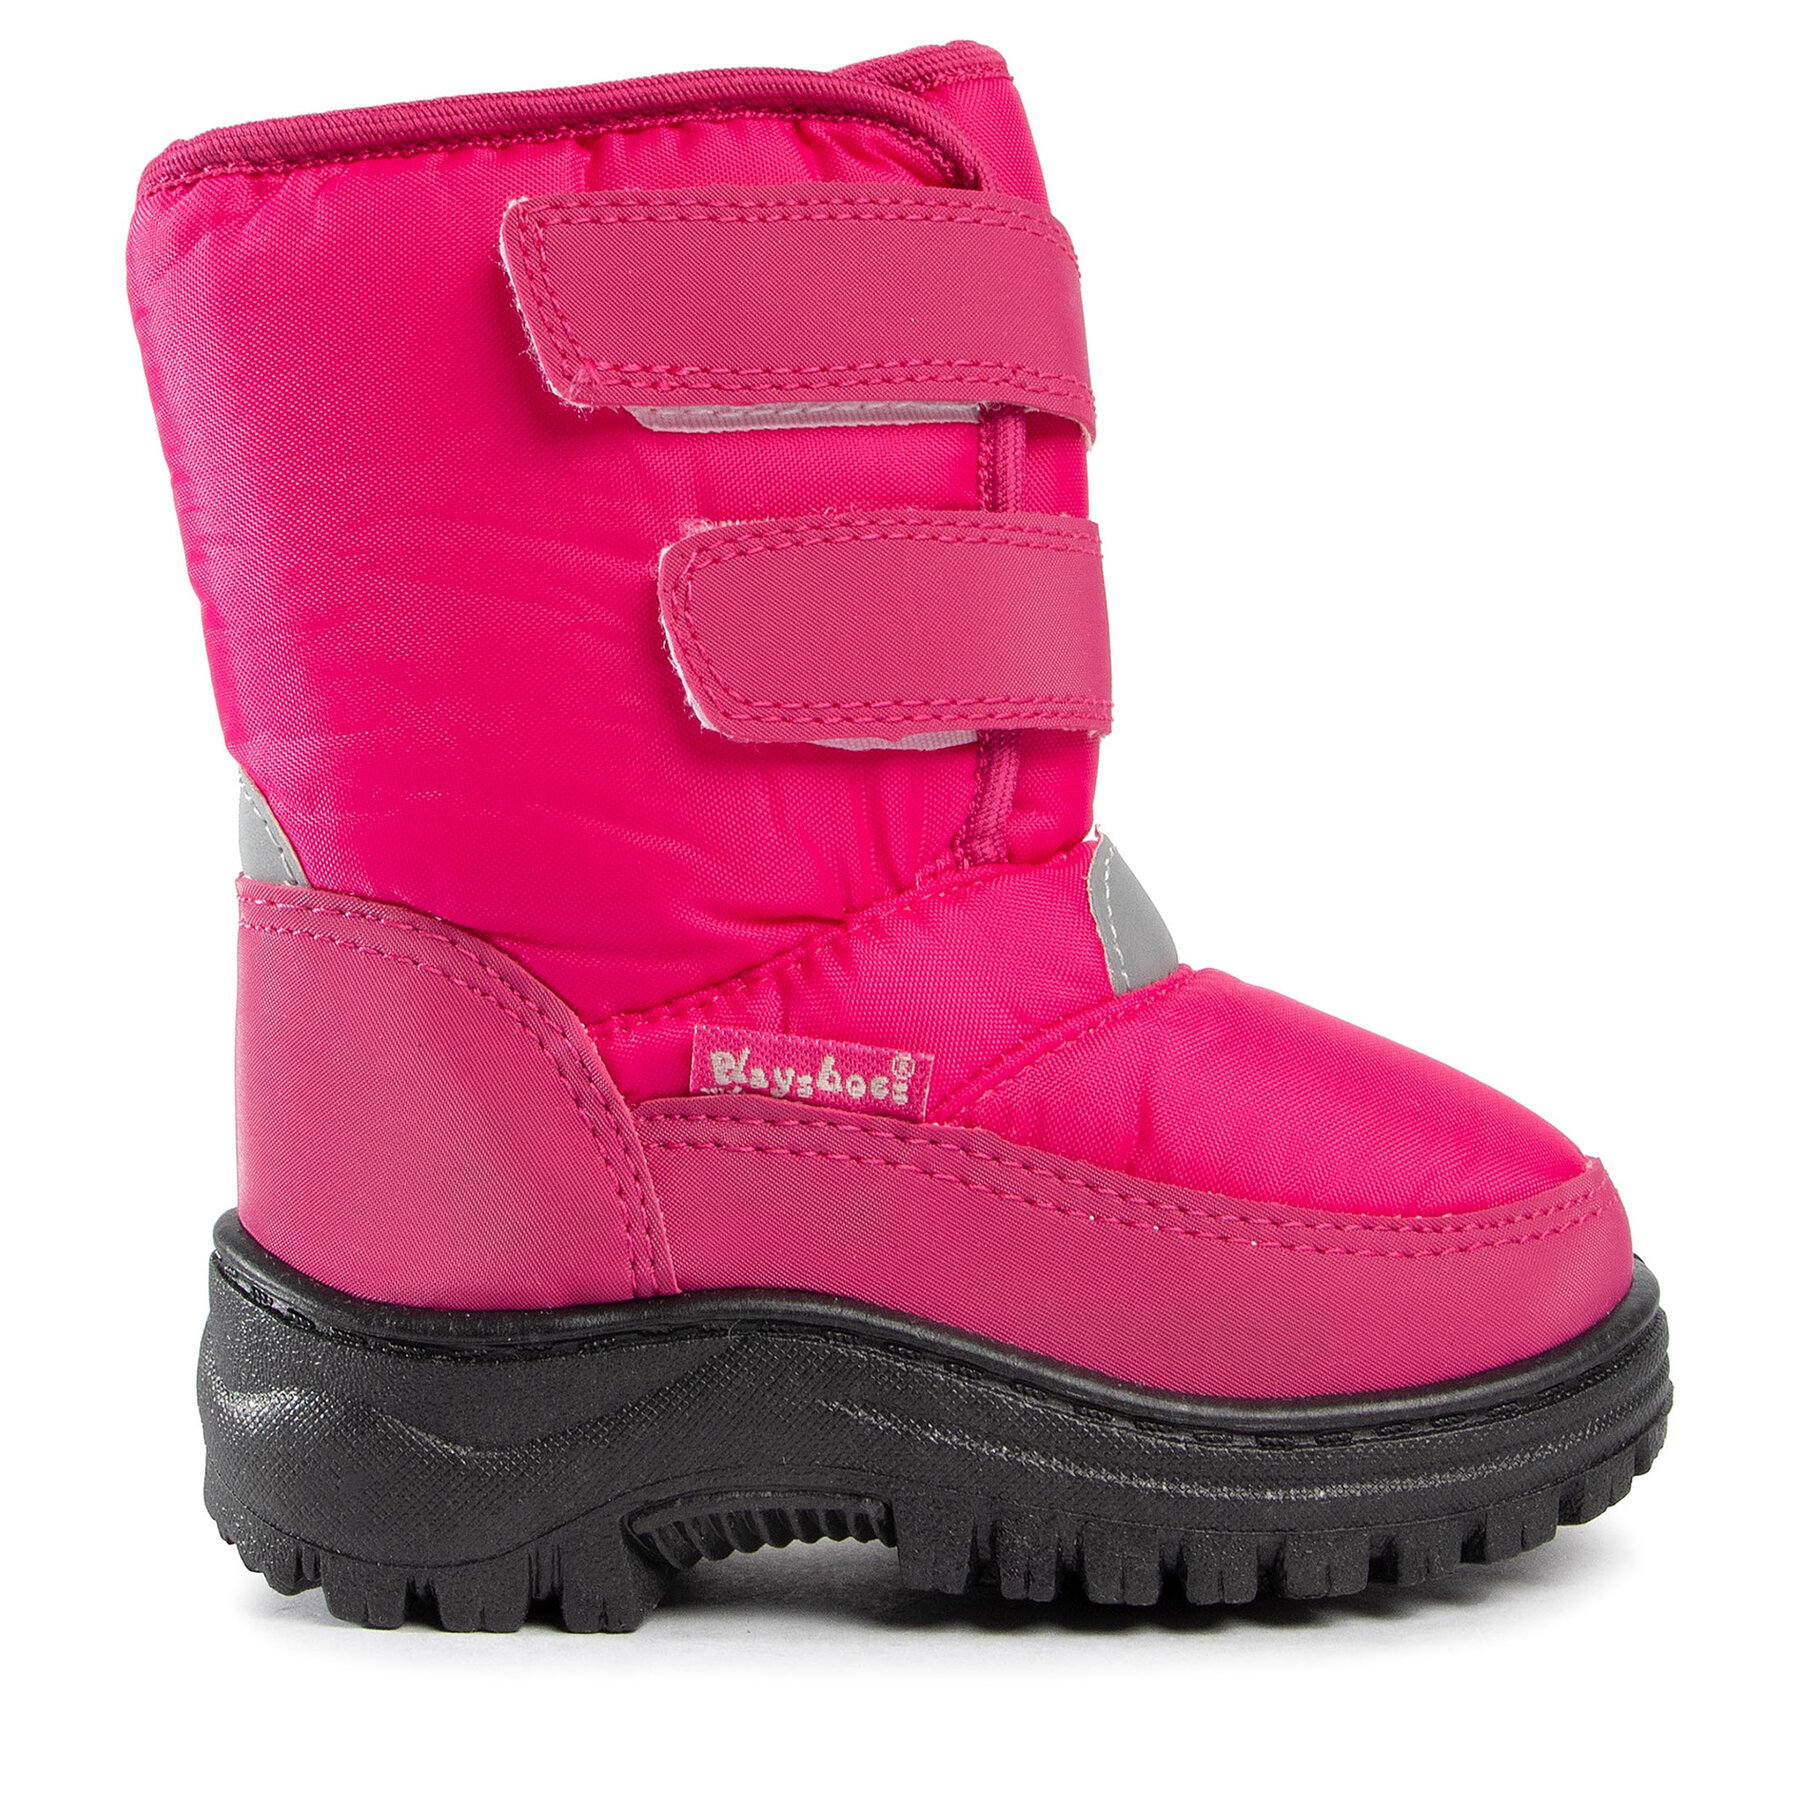 Comprar en oferta Playshoes Winter Bootie with Velcro fastener pink